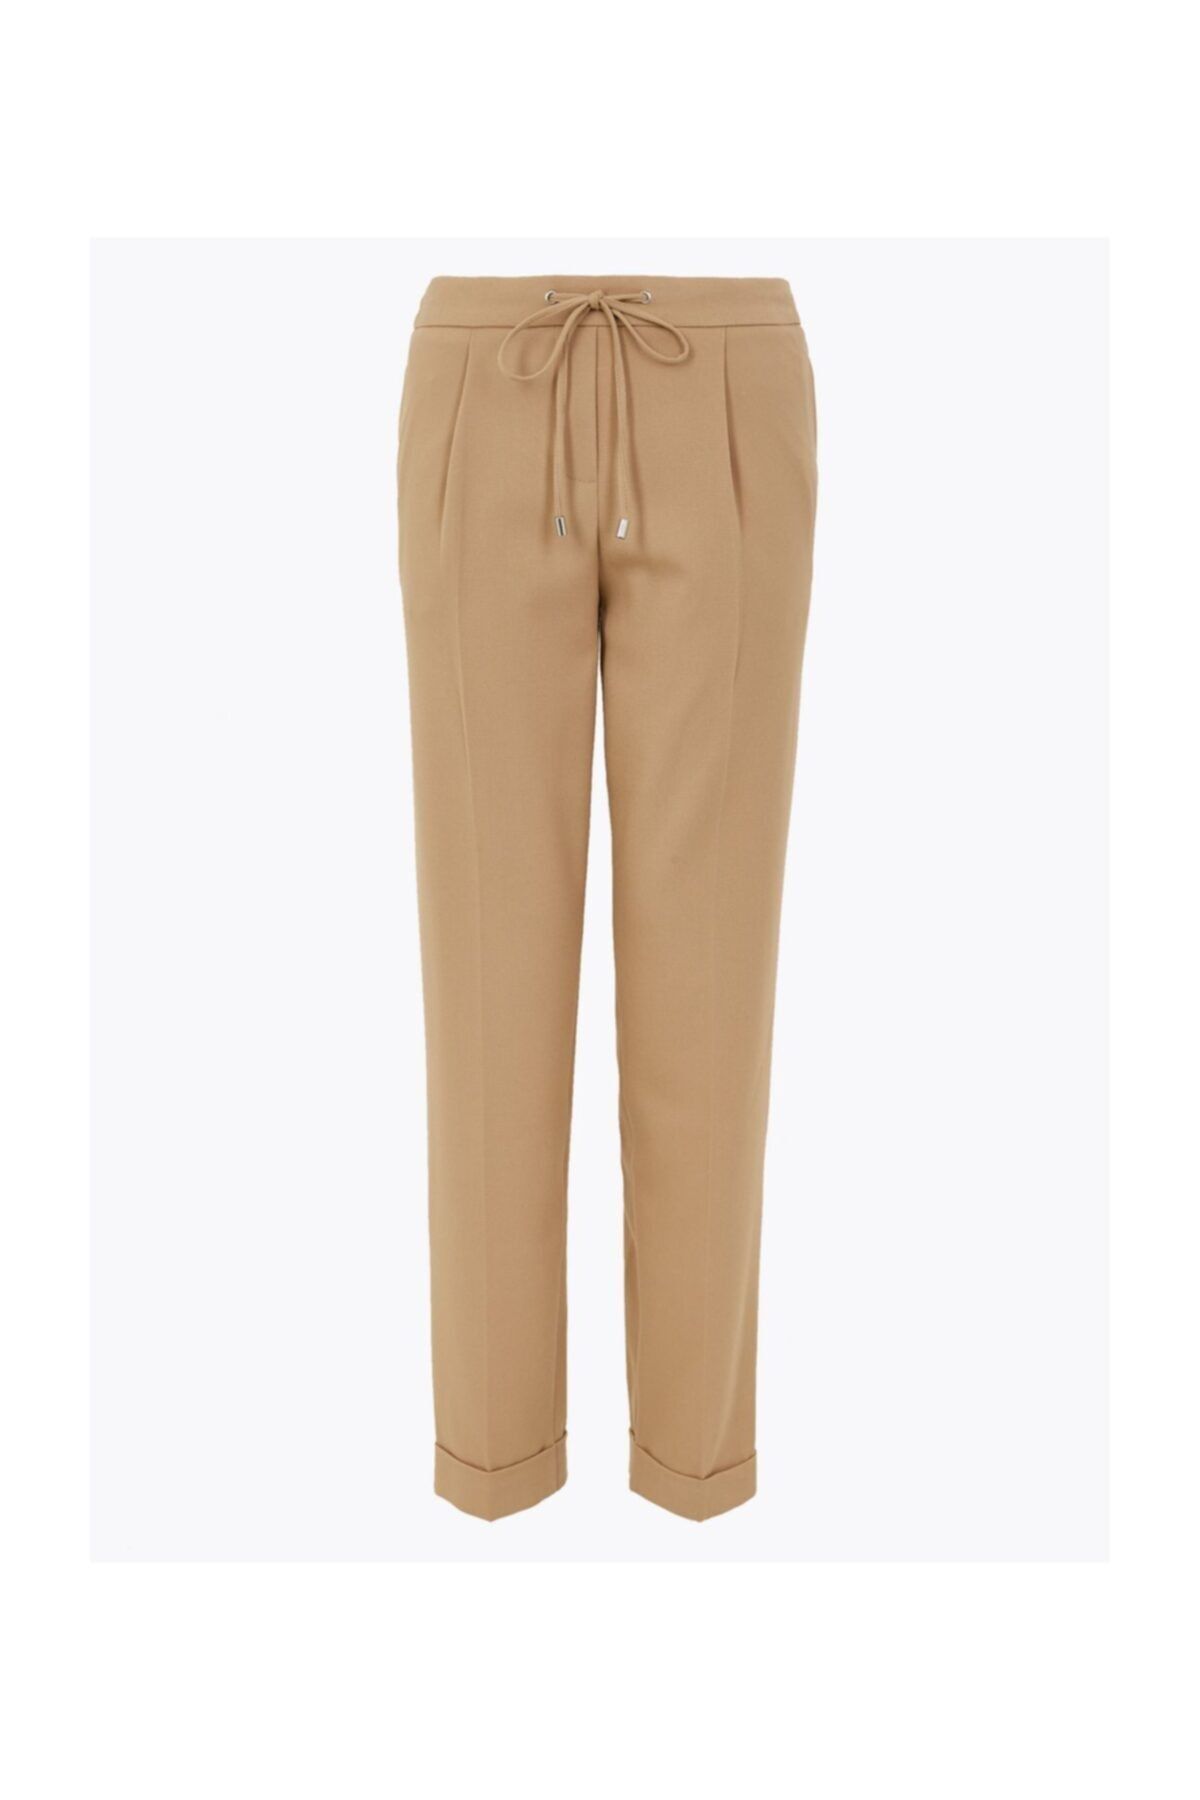 Marks & Spencer Kadın Kahverengi Tapered Leg Pantolon T59006593